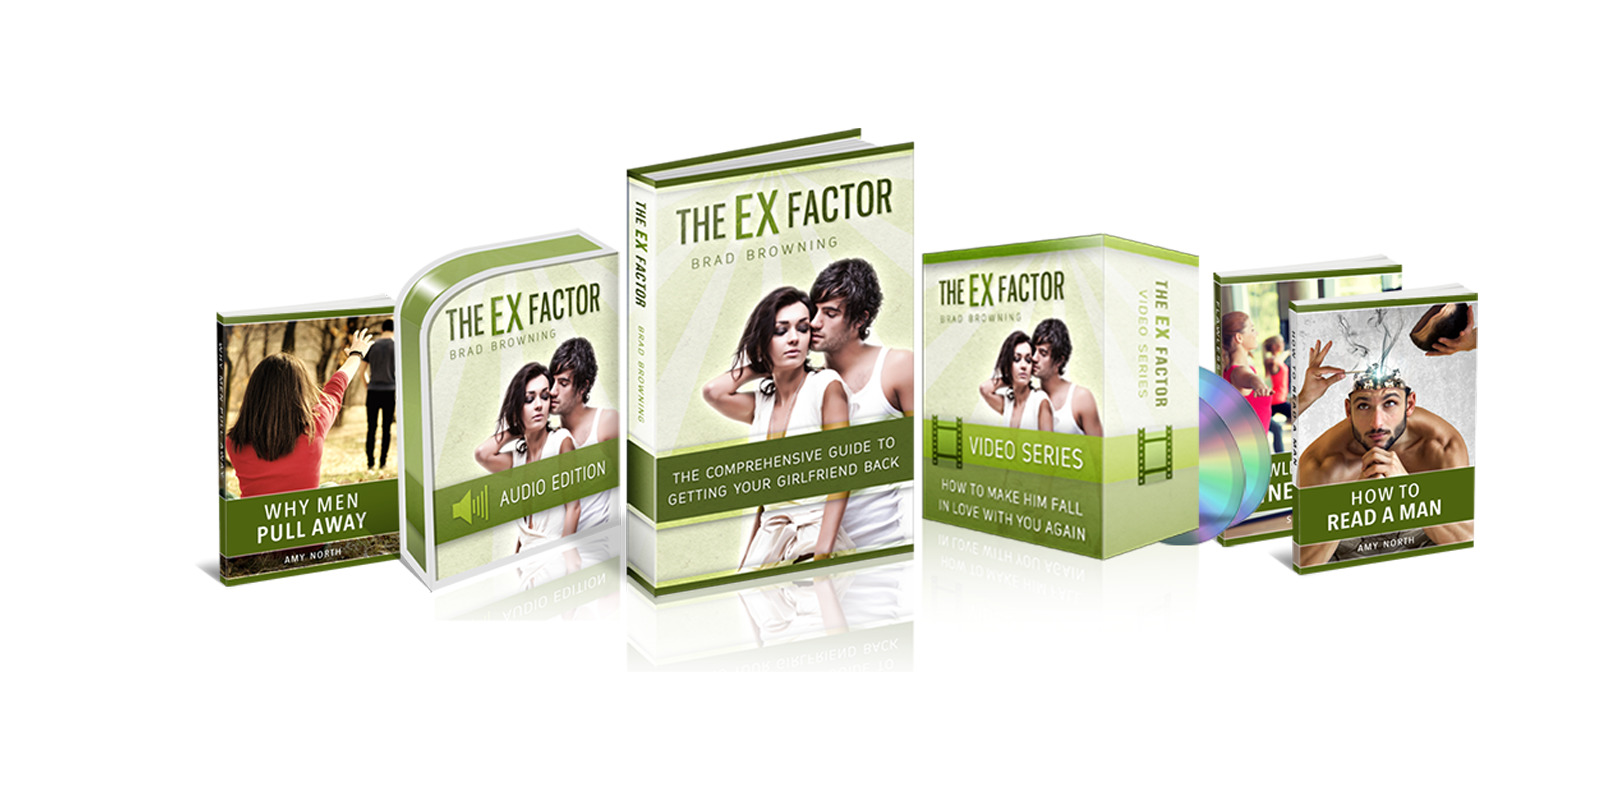 The Ex factor guide reviews